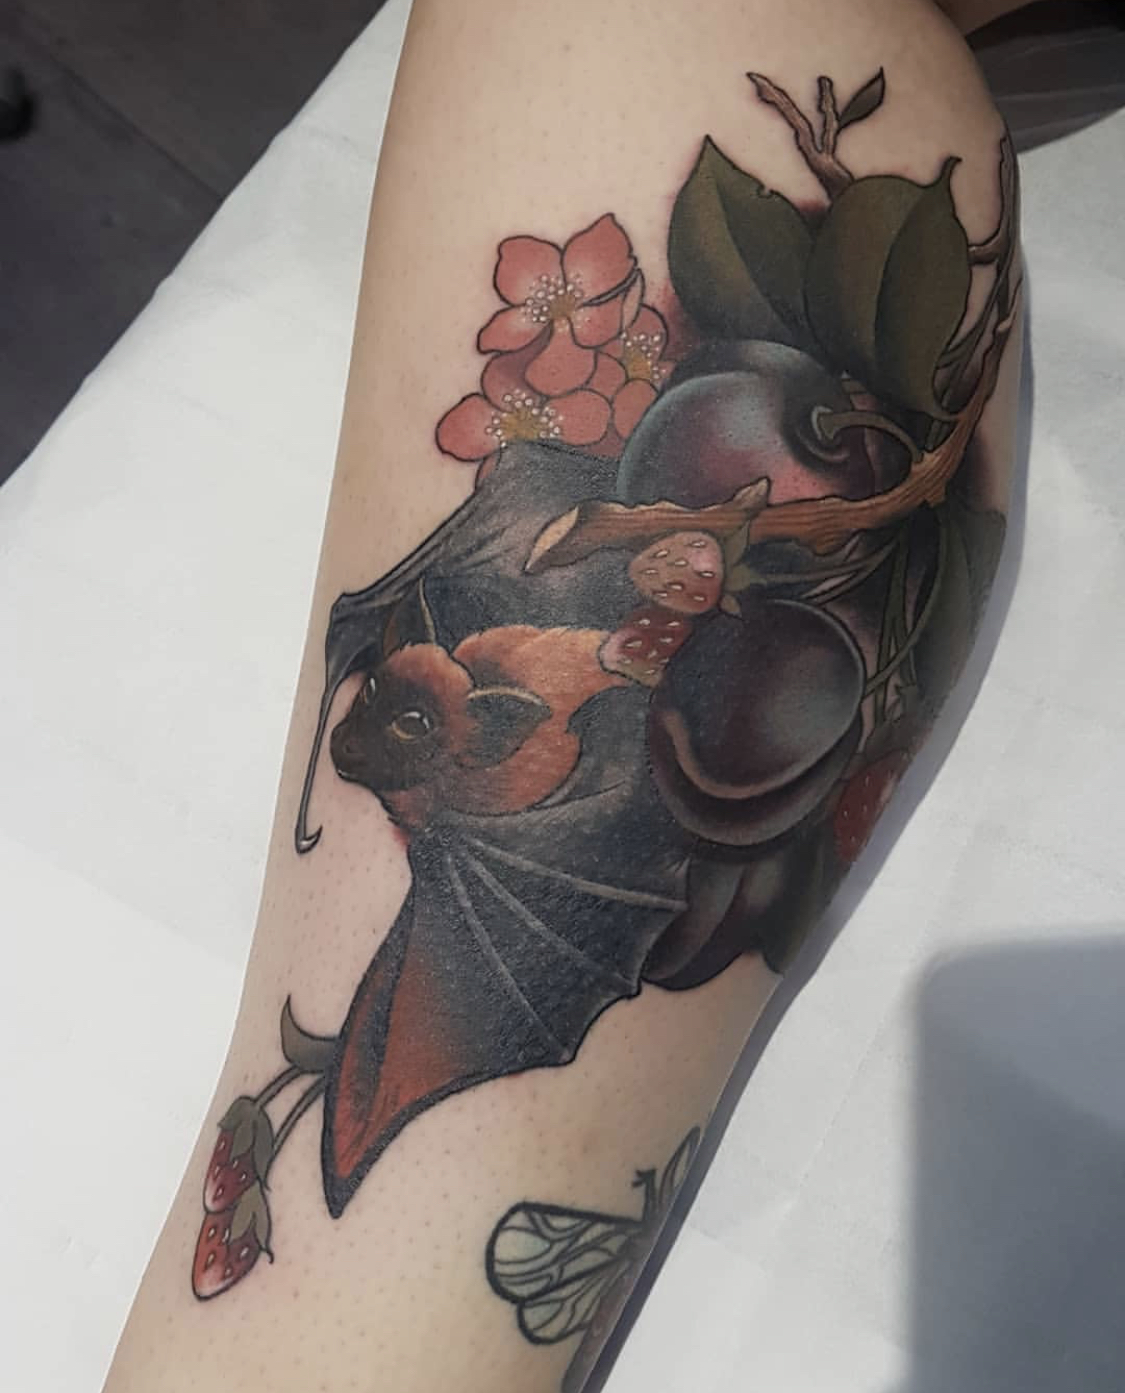 Fruit bat tattoo